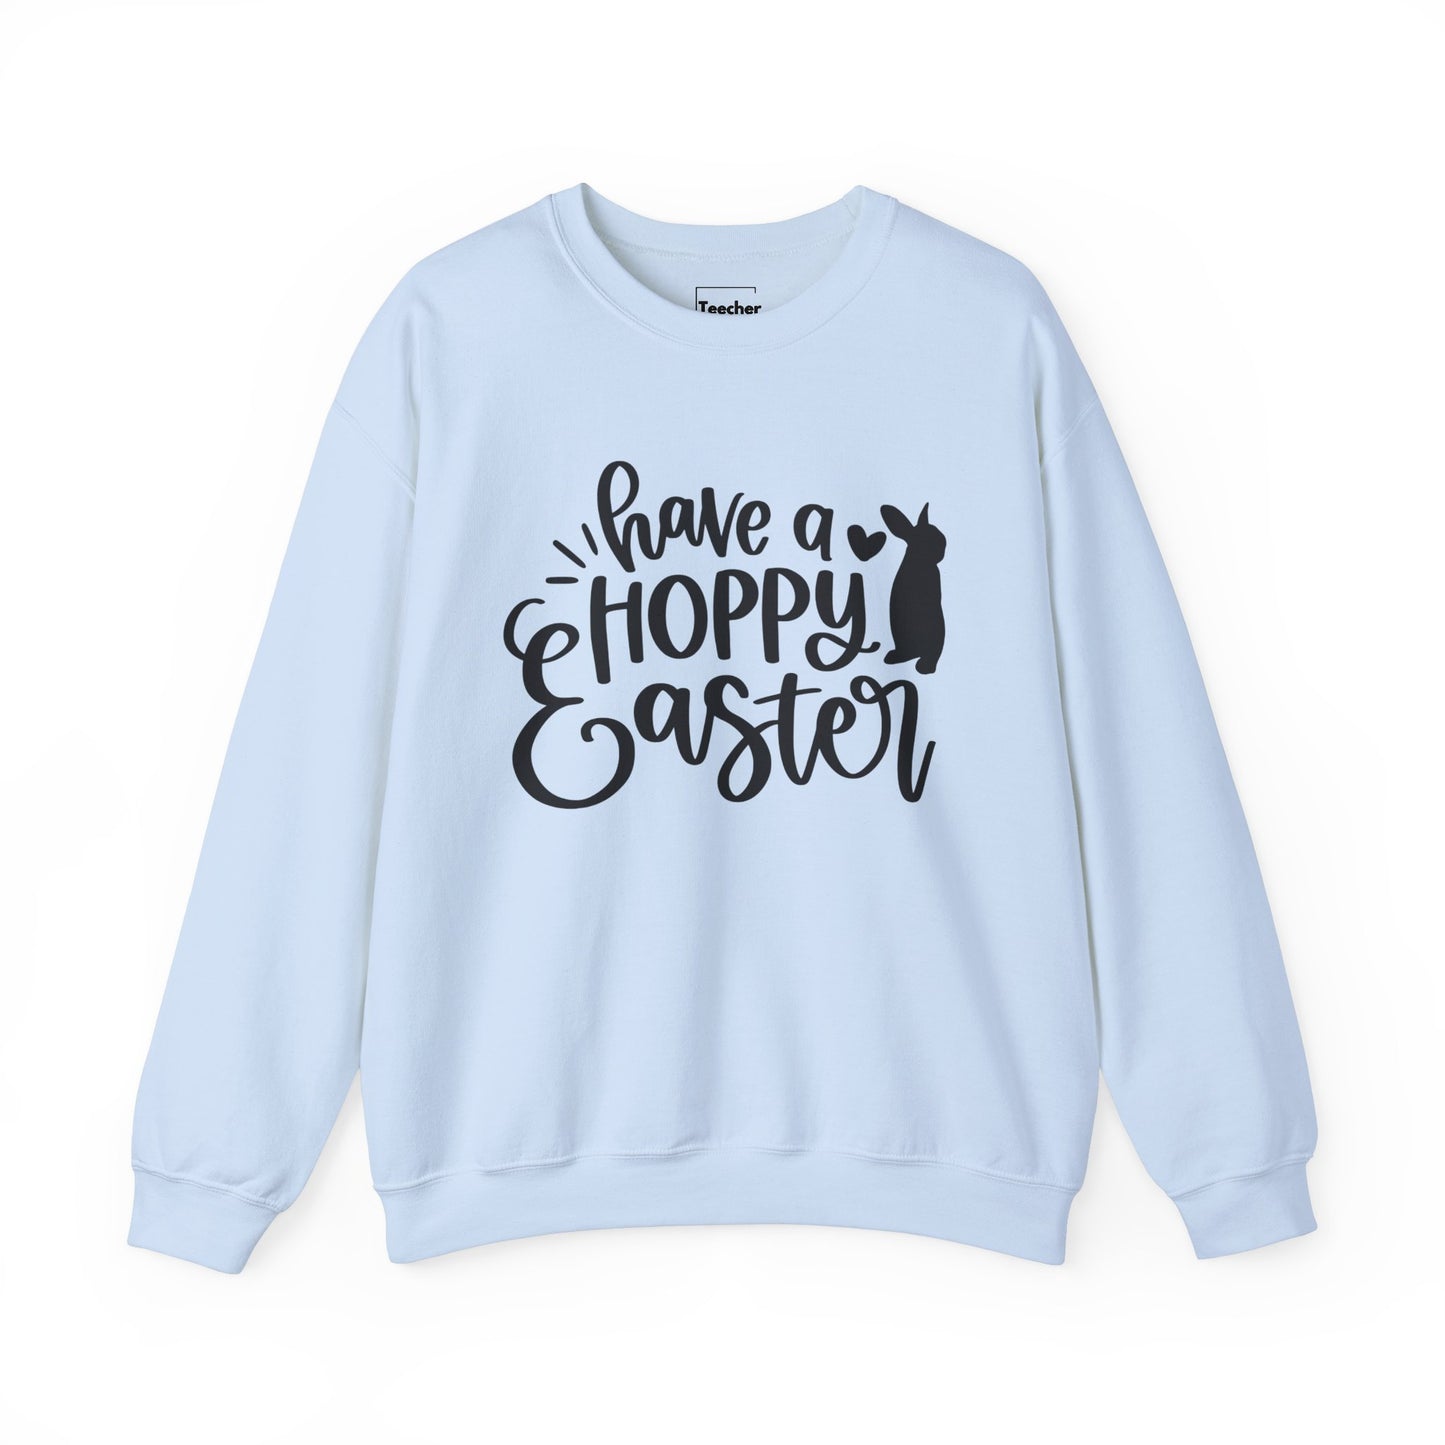 Hoppy Easter Sweatshirt